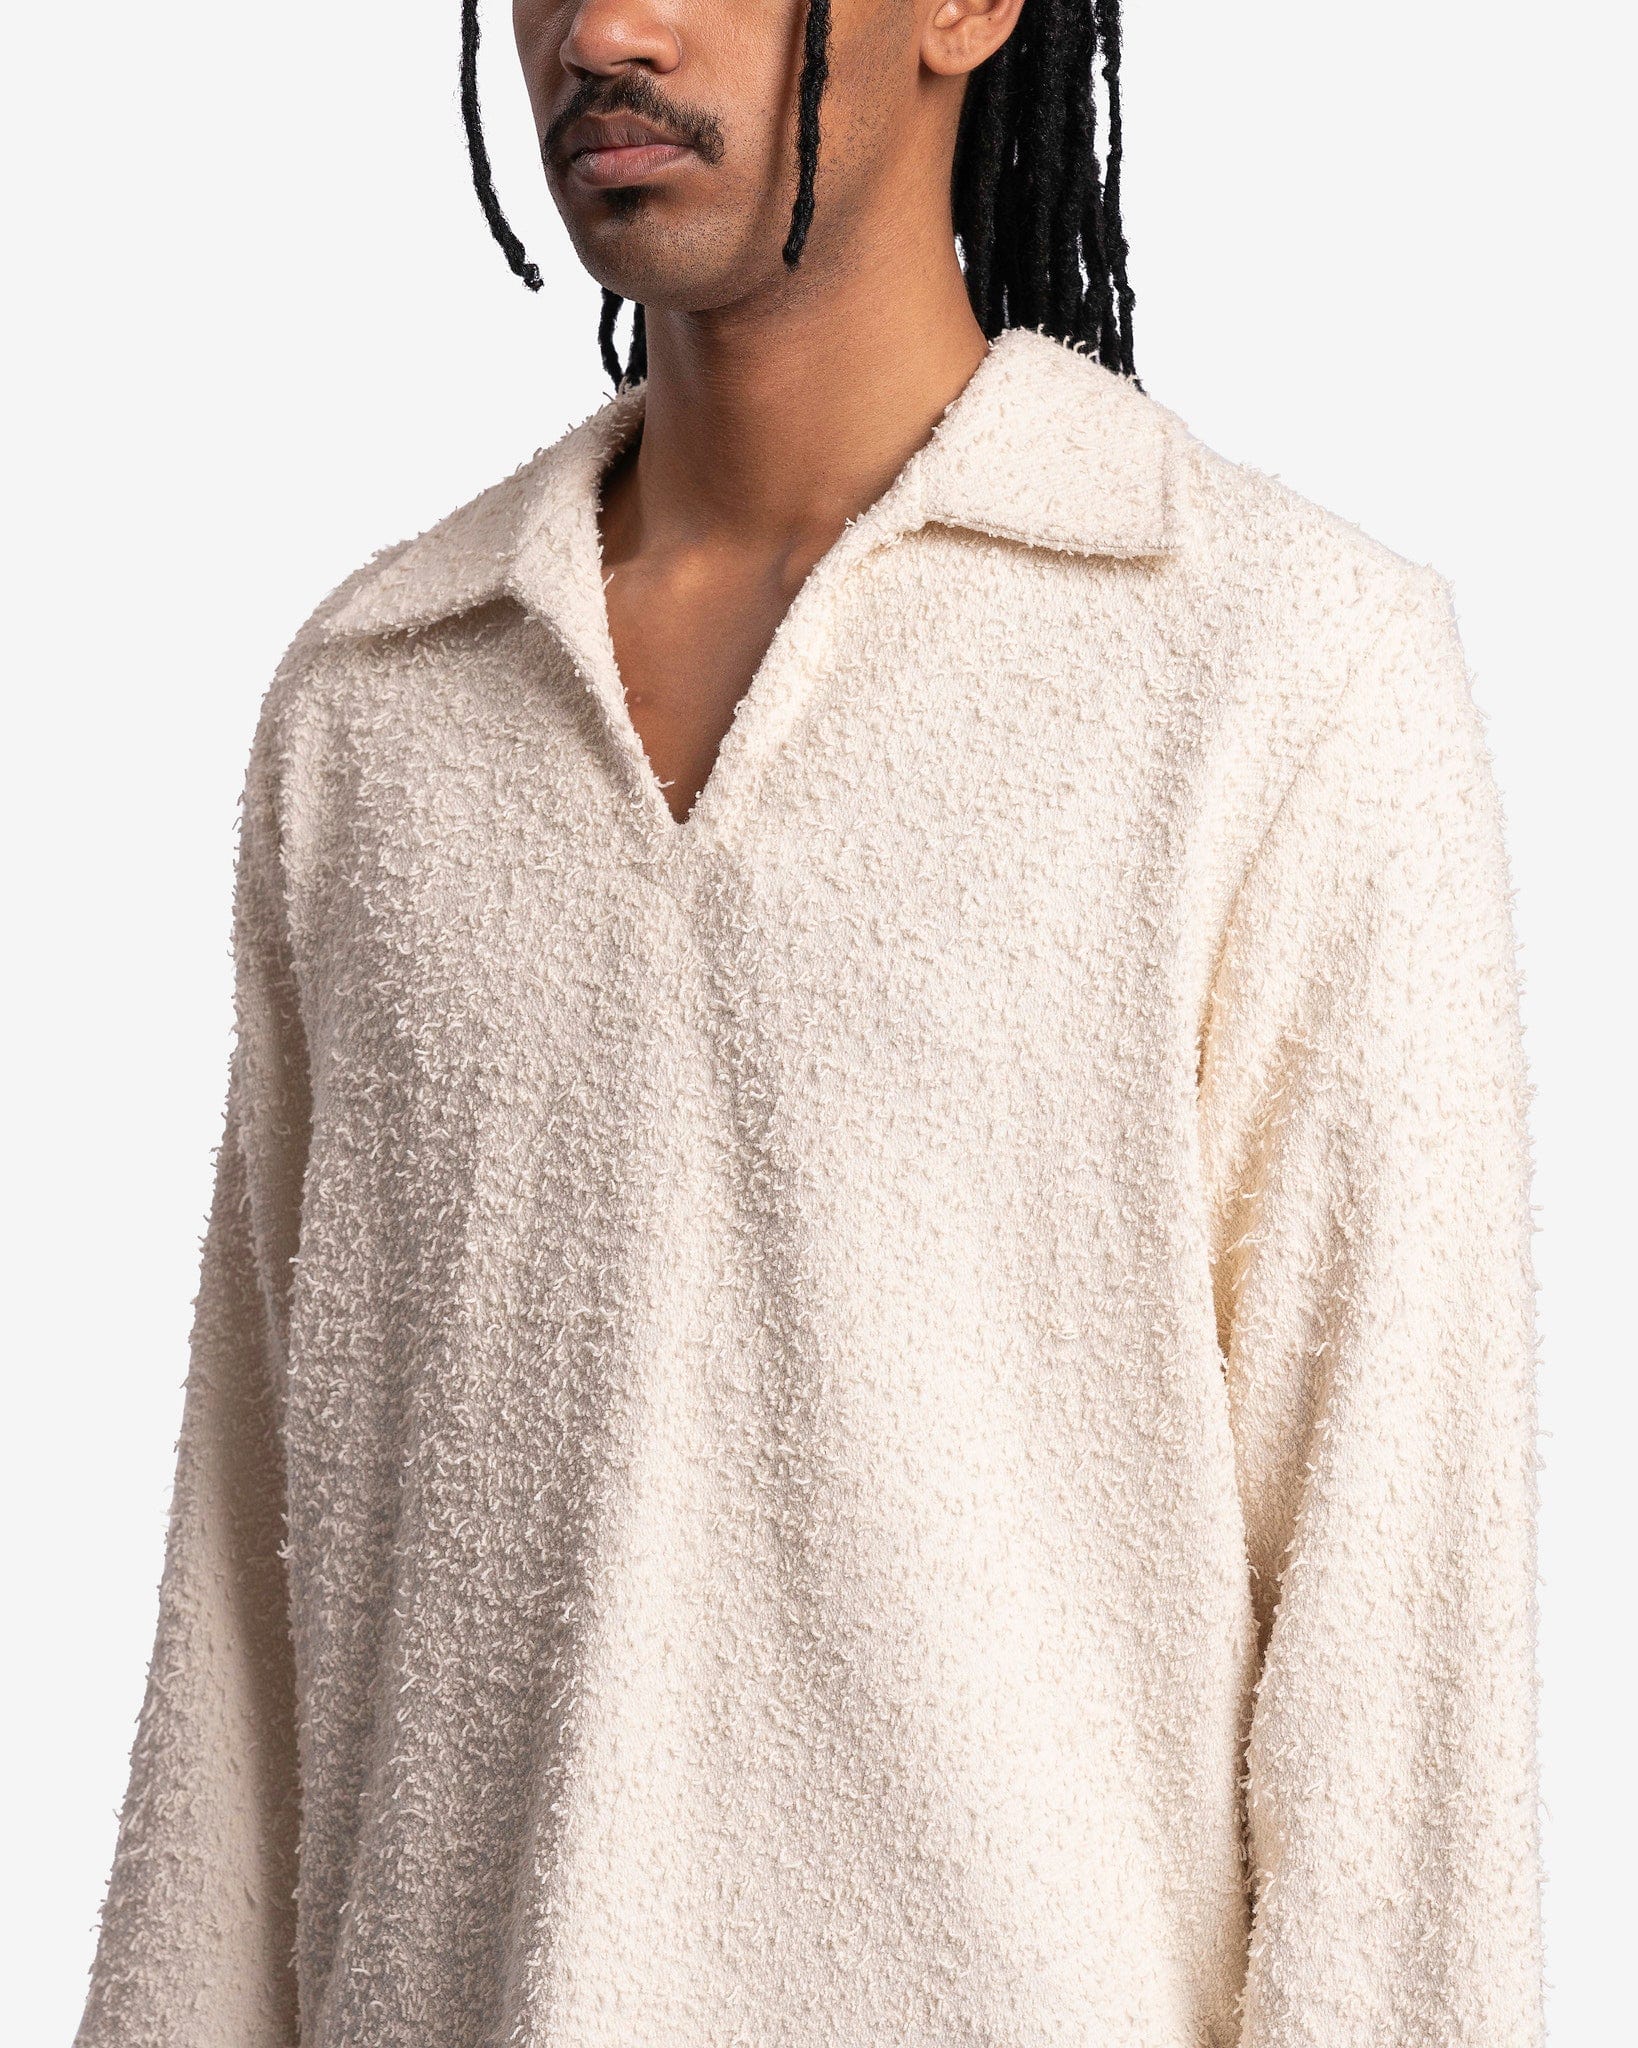 Séfr Men's Sweater Luis Sweater in Fringed Cream